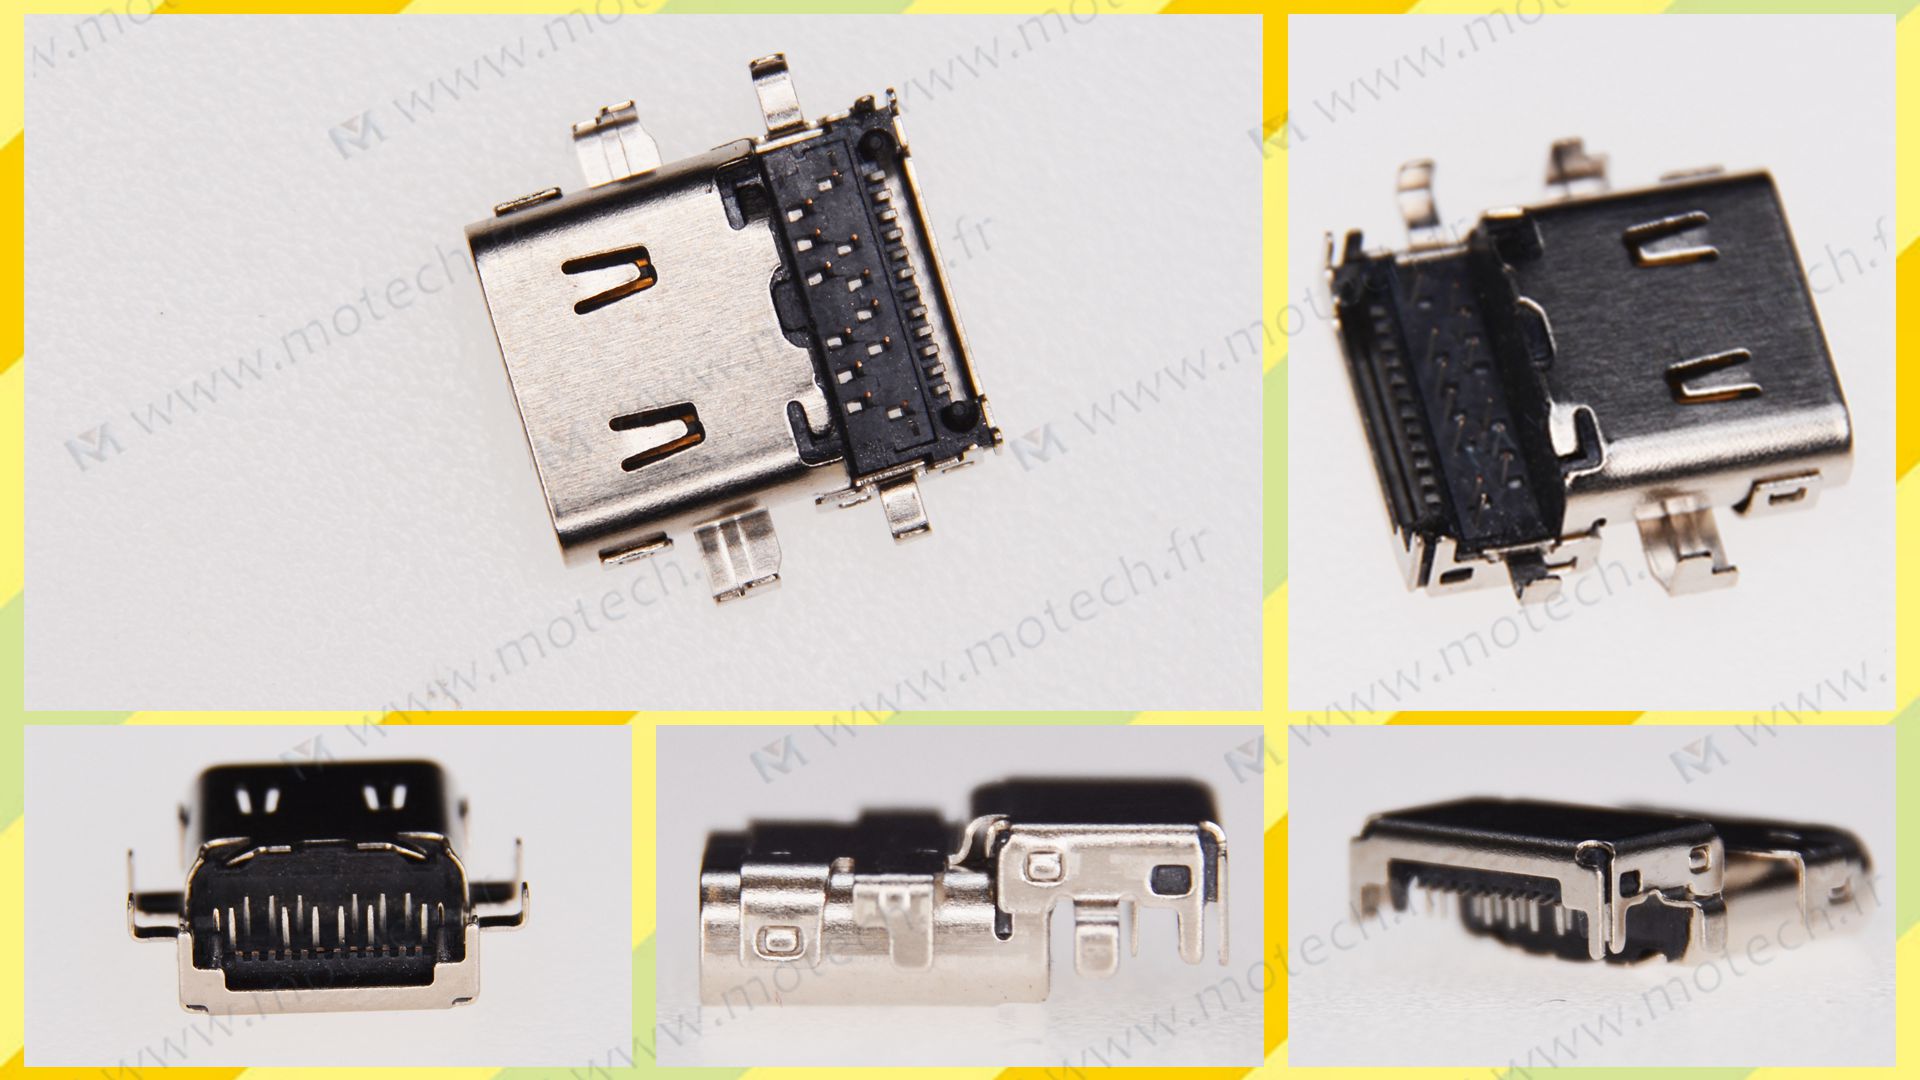  HP 15-bl012dx USB Type C, HP 15-bl012dx Port USB à souder, HP 15-bl012dx charging card, HP 15-bl012dx USB port for welding, HP 15-bl012dx charging port, HP 15-bl012dx charging connector, HP 15-bl012dx DC Power Jack, Socket Plug Port HP 15-bl012dx, Power jack HP 15-bl012dx, 